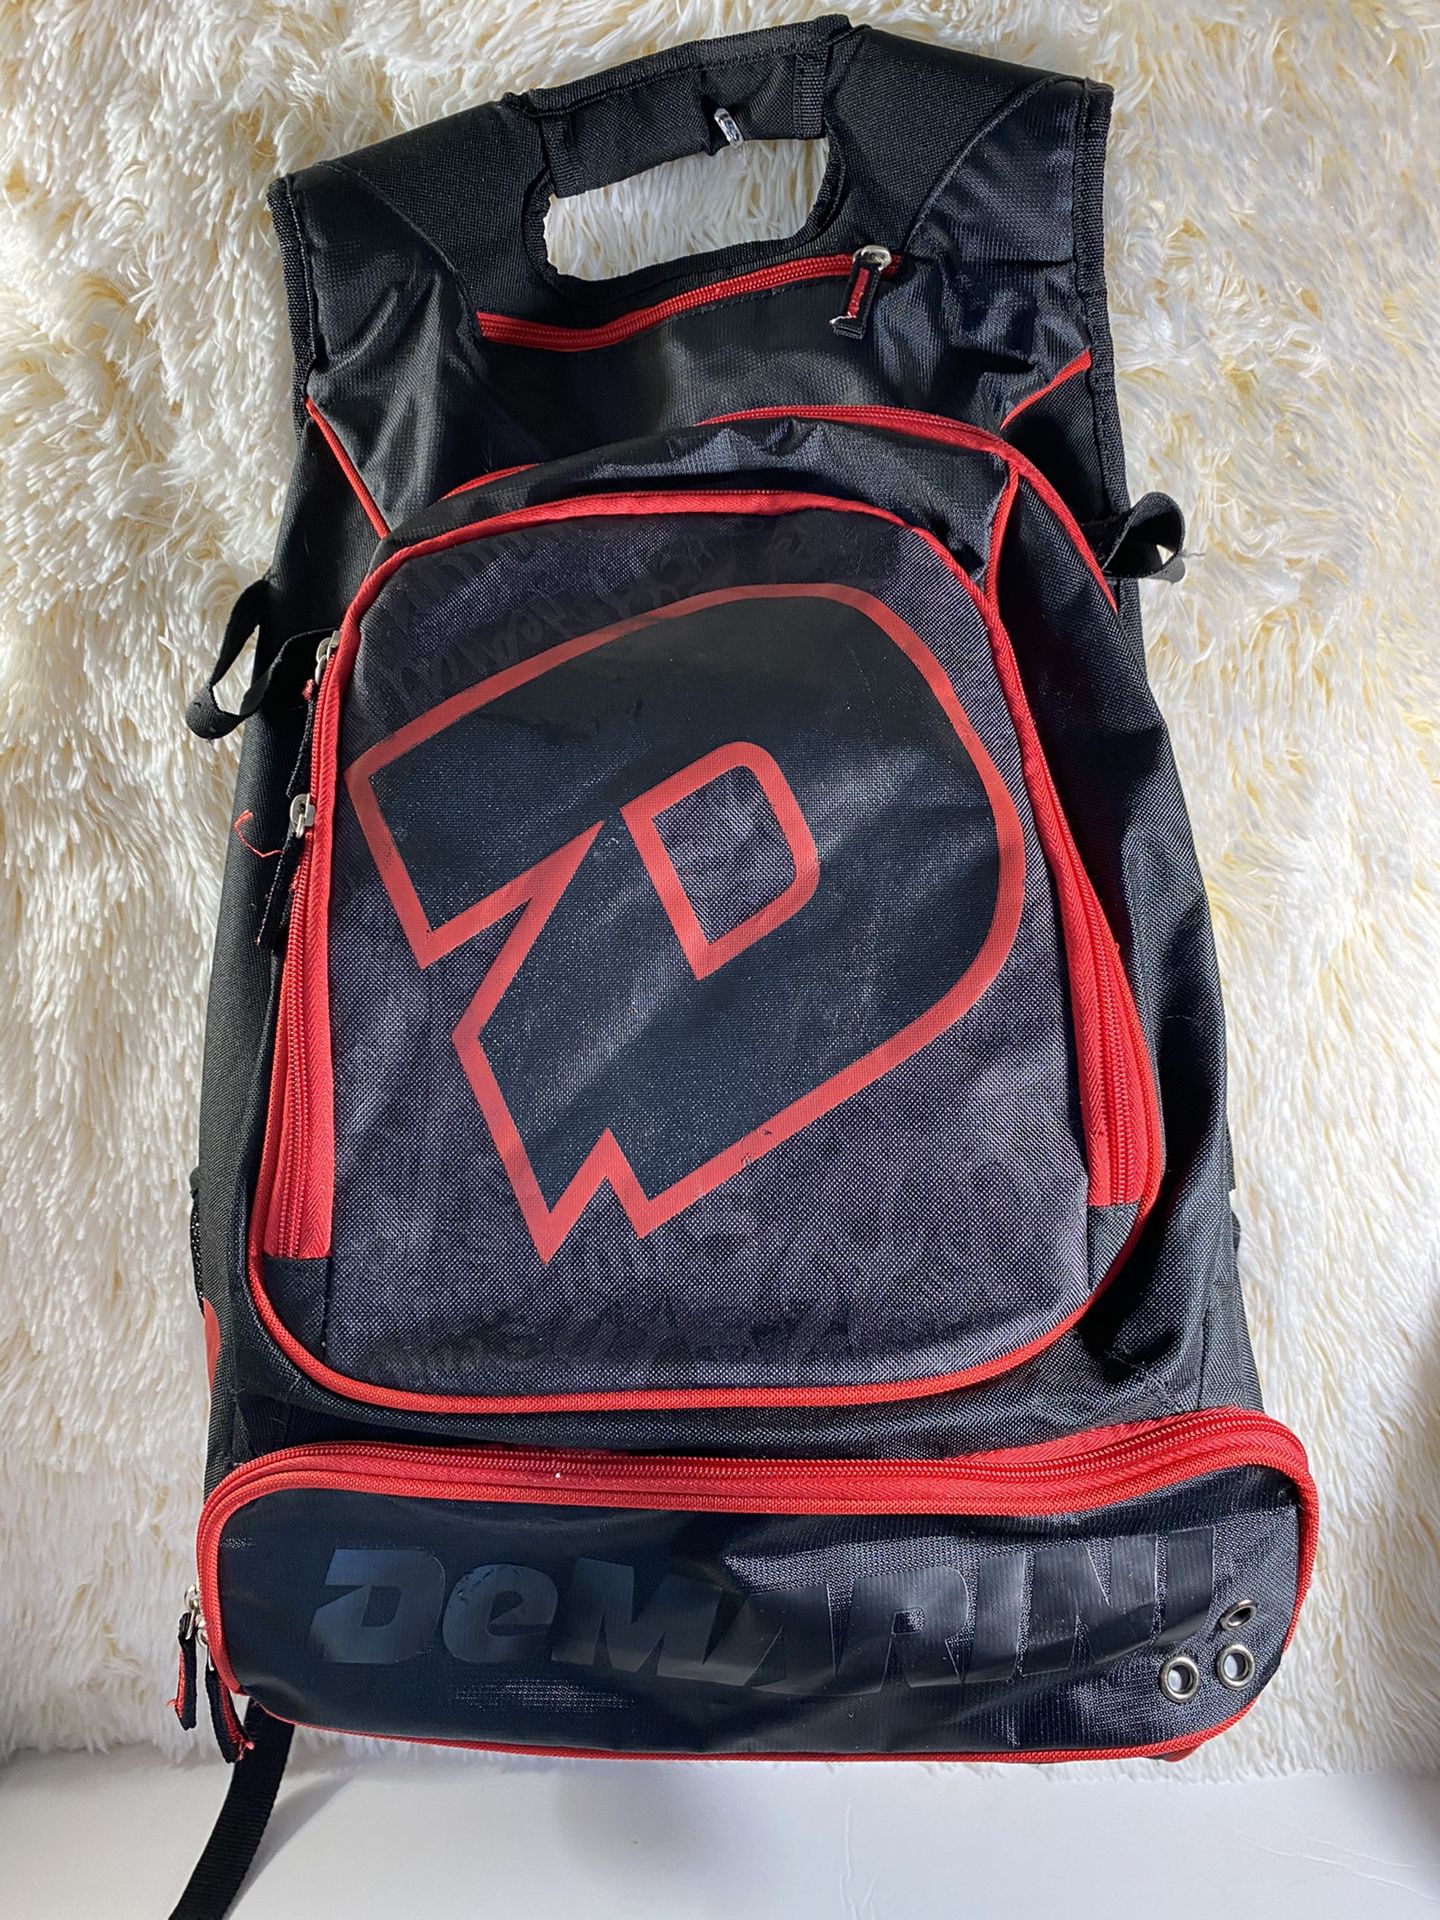 DeMarini Backpack Baseball/Softball Bat Equipment Bag-2 Bats